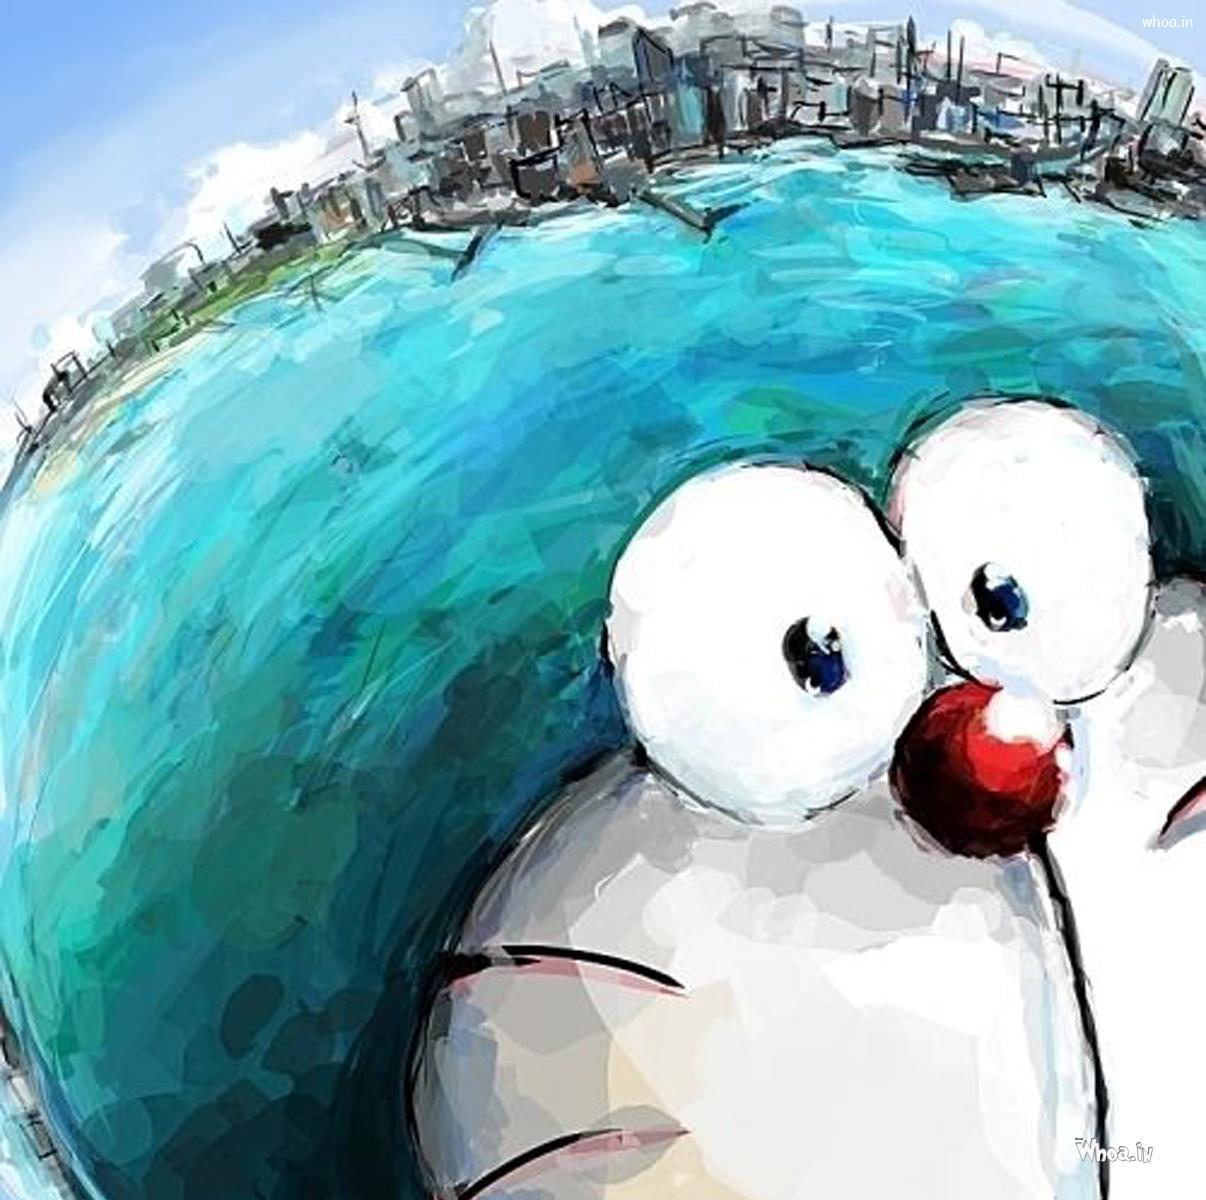 Doraemon Cartoon Image And Wallpaper Full HD Image